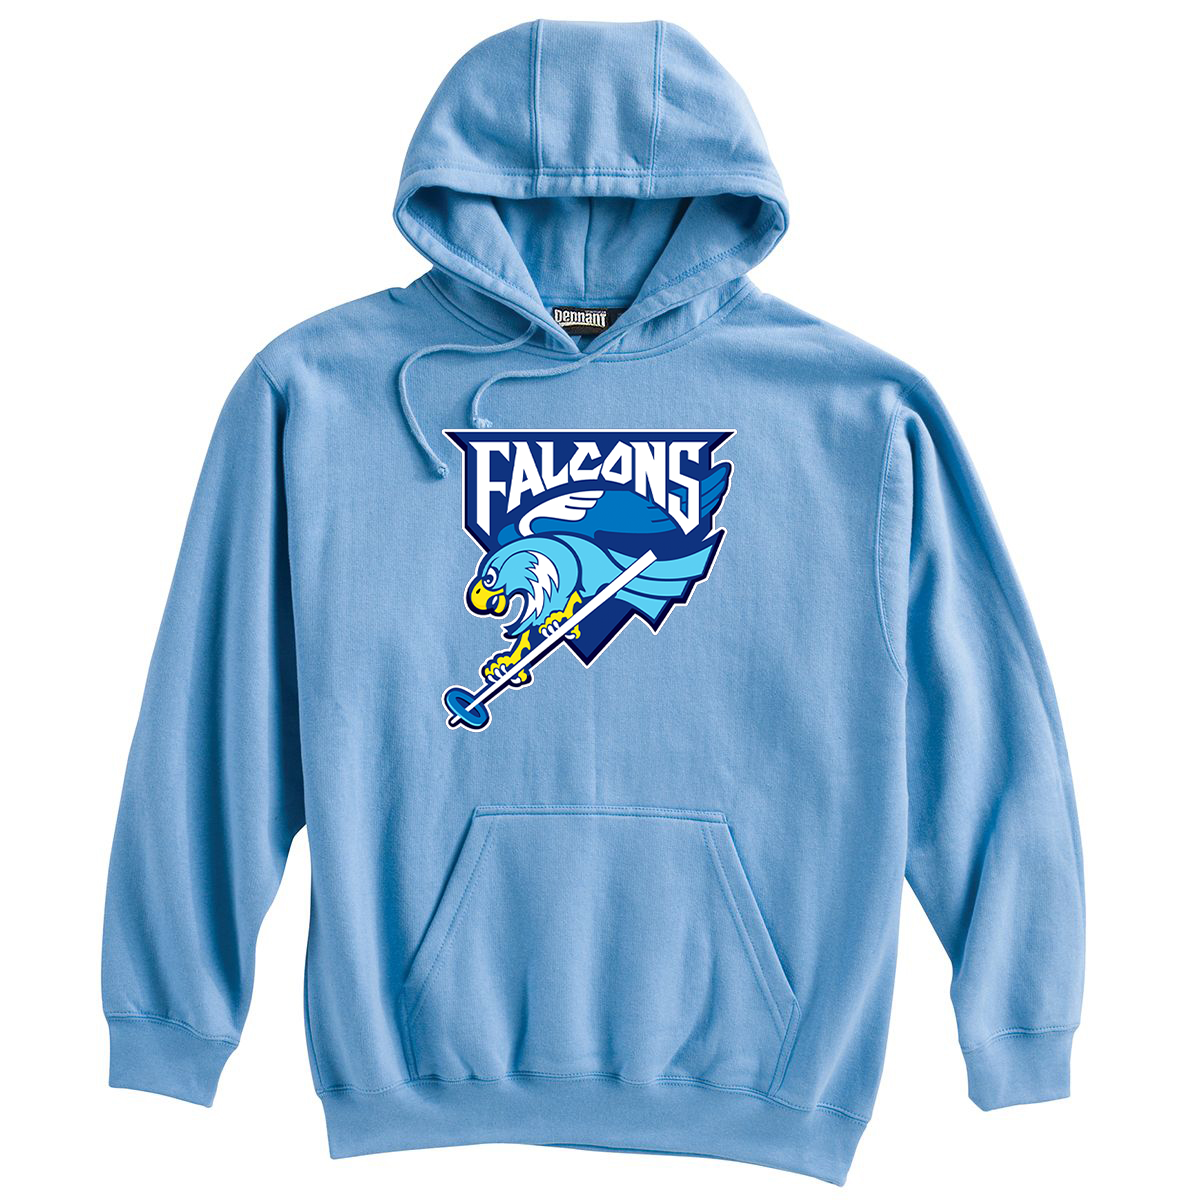 Falcons Ringettes Sweatshirt